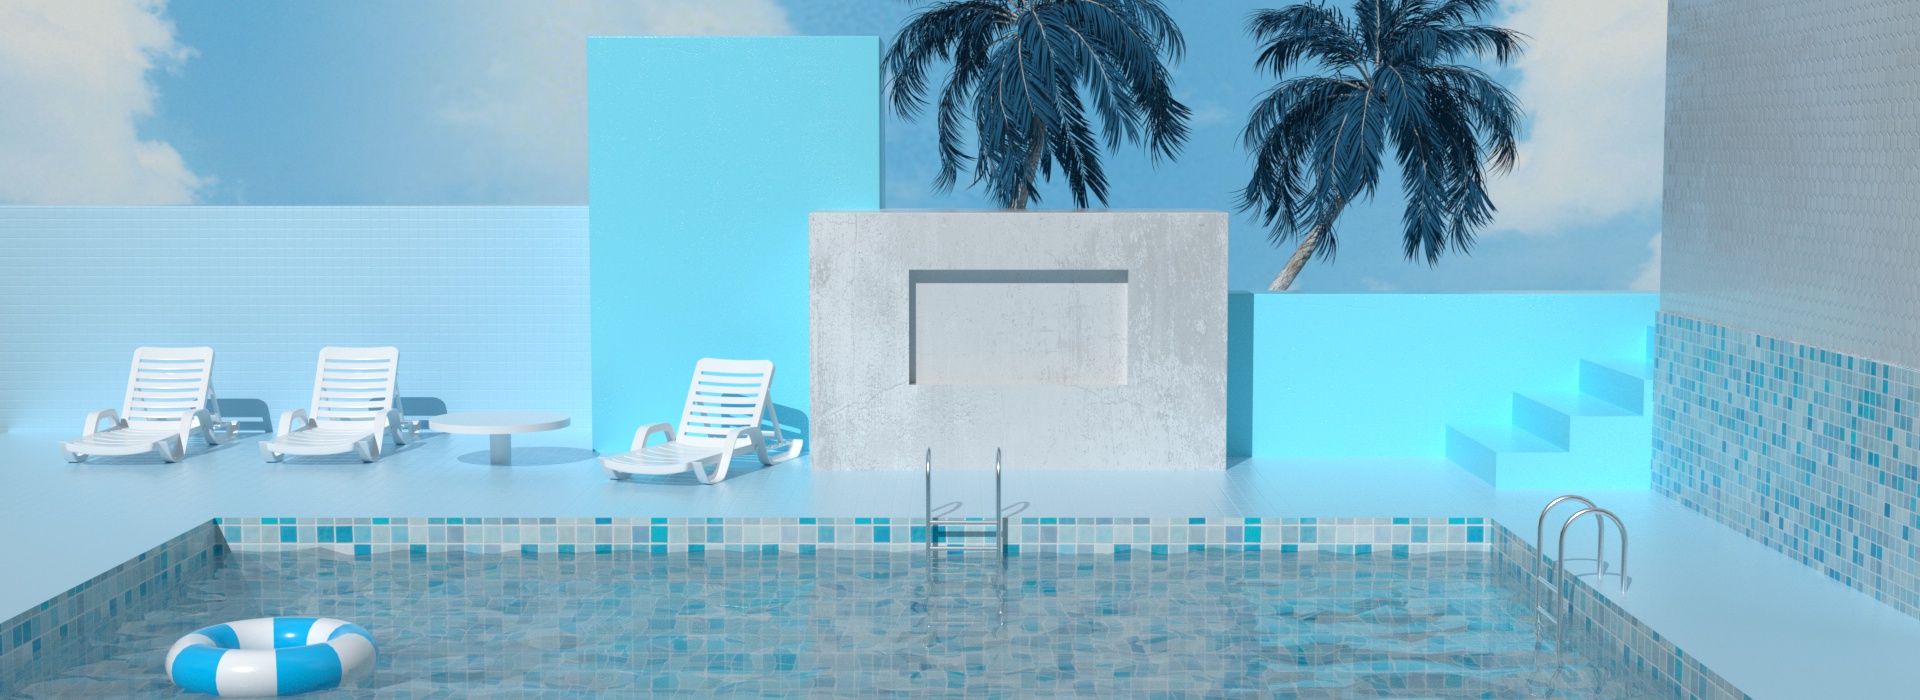 C4D模型夏季泳池清凉电商促销场景028.jpg